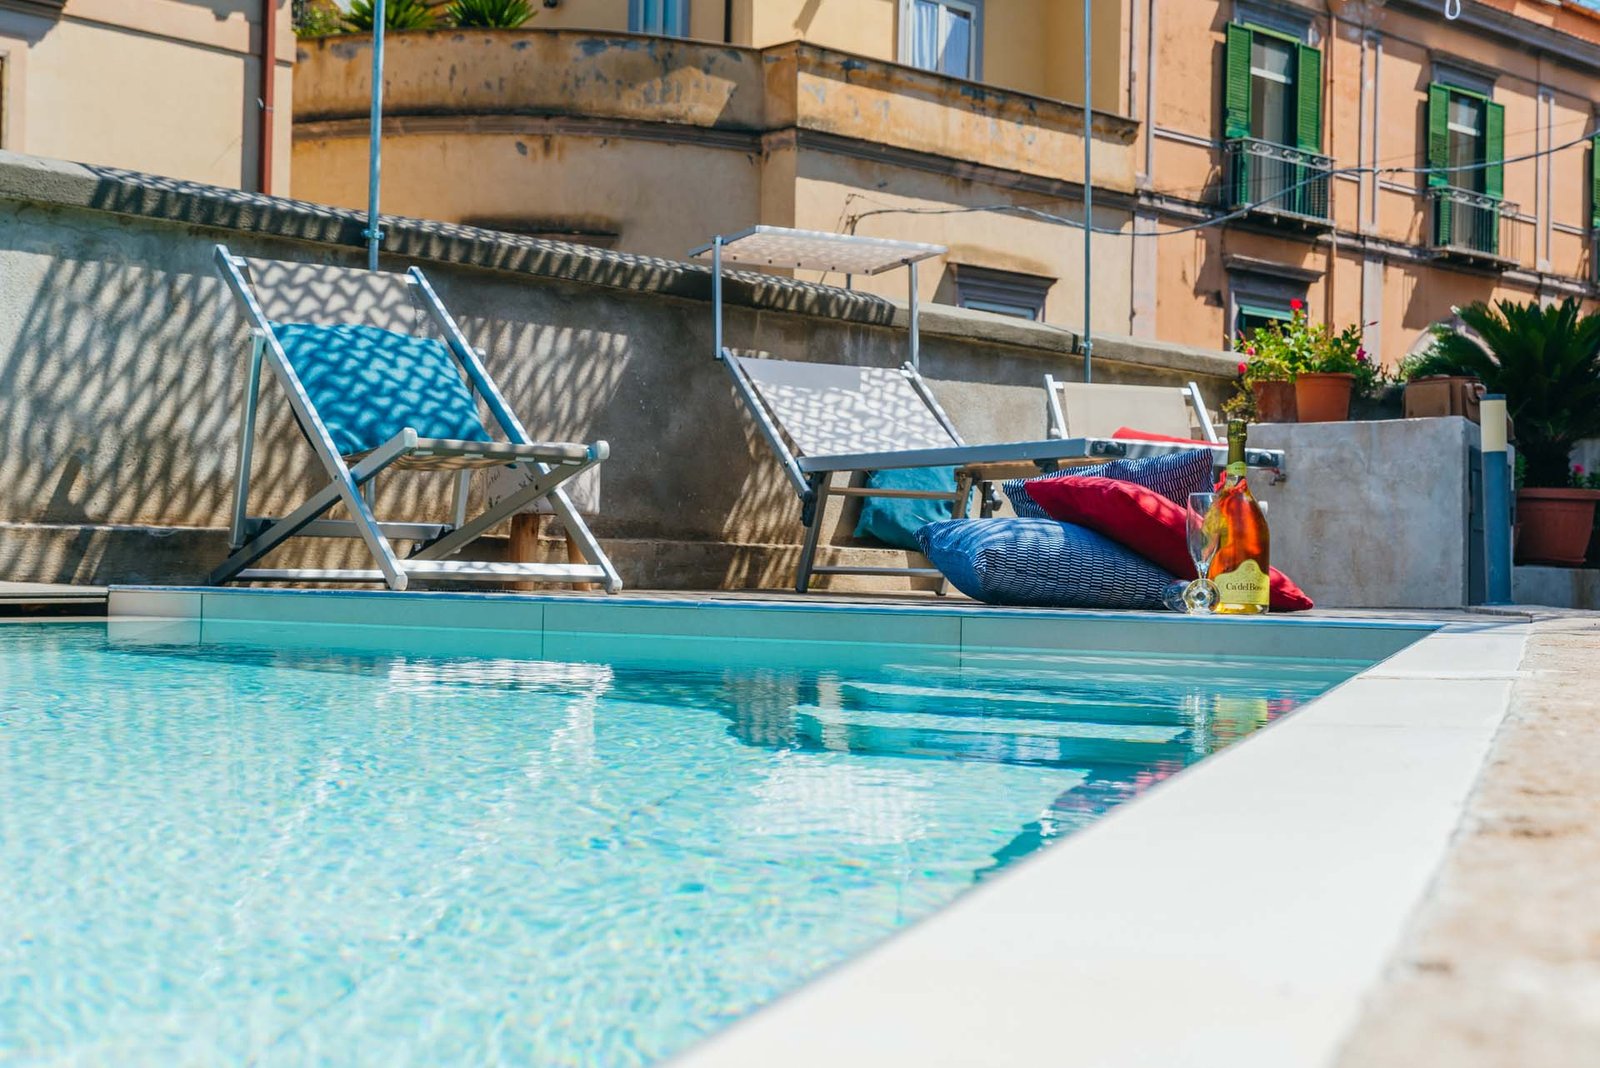 Spacious Villa with Pool in Sorrento Coast